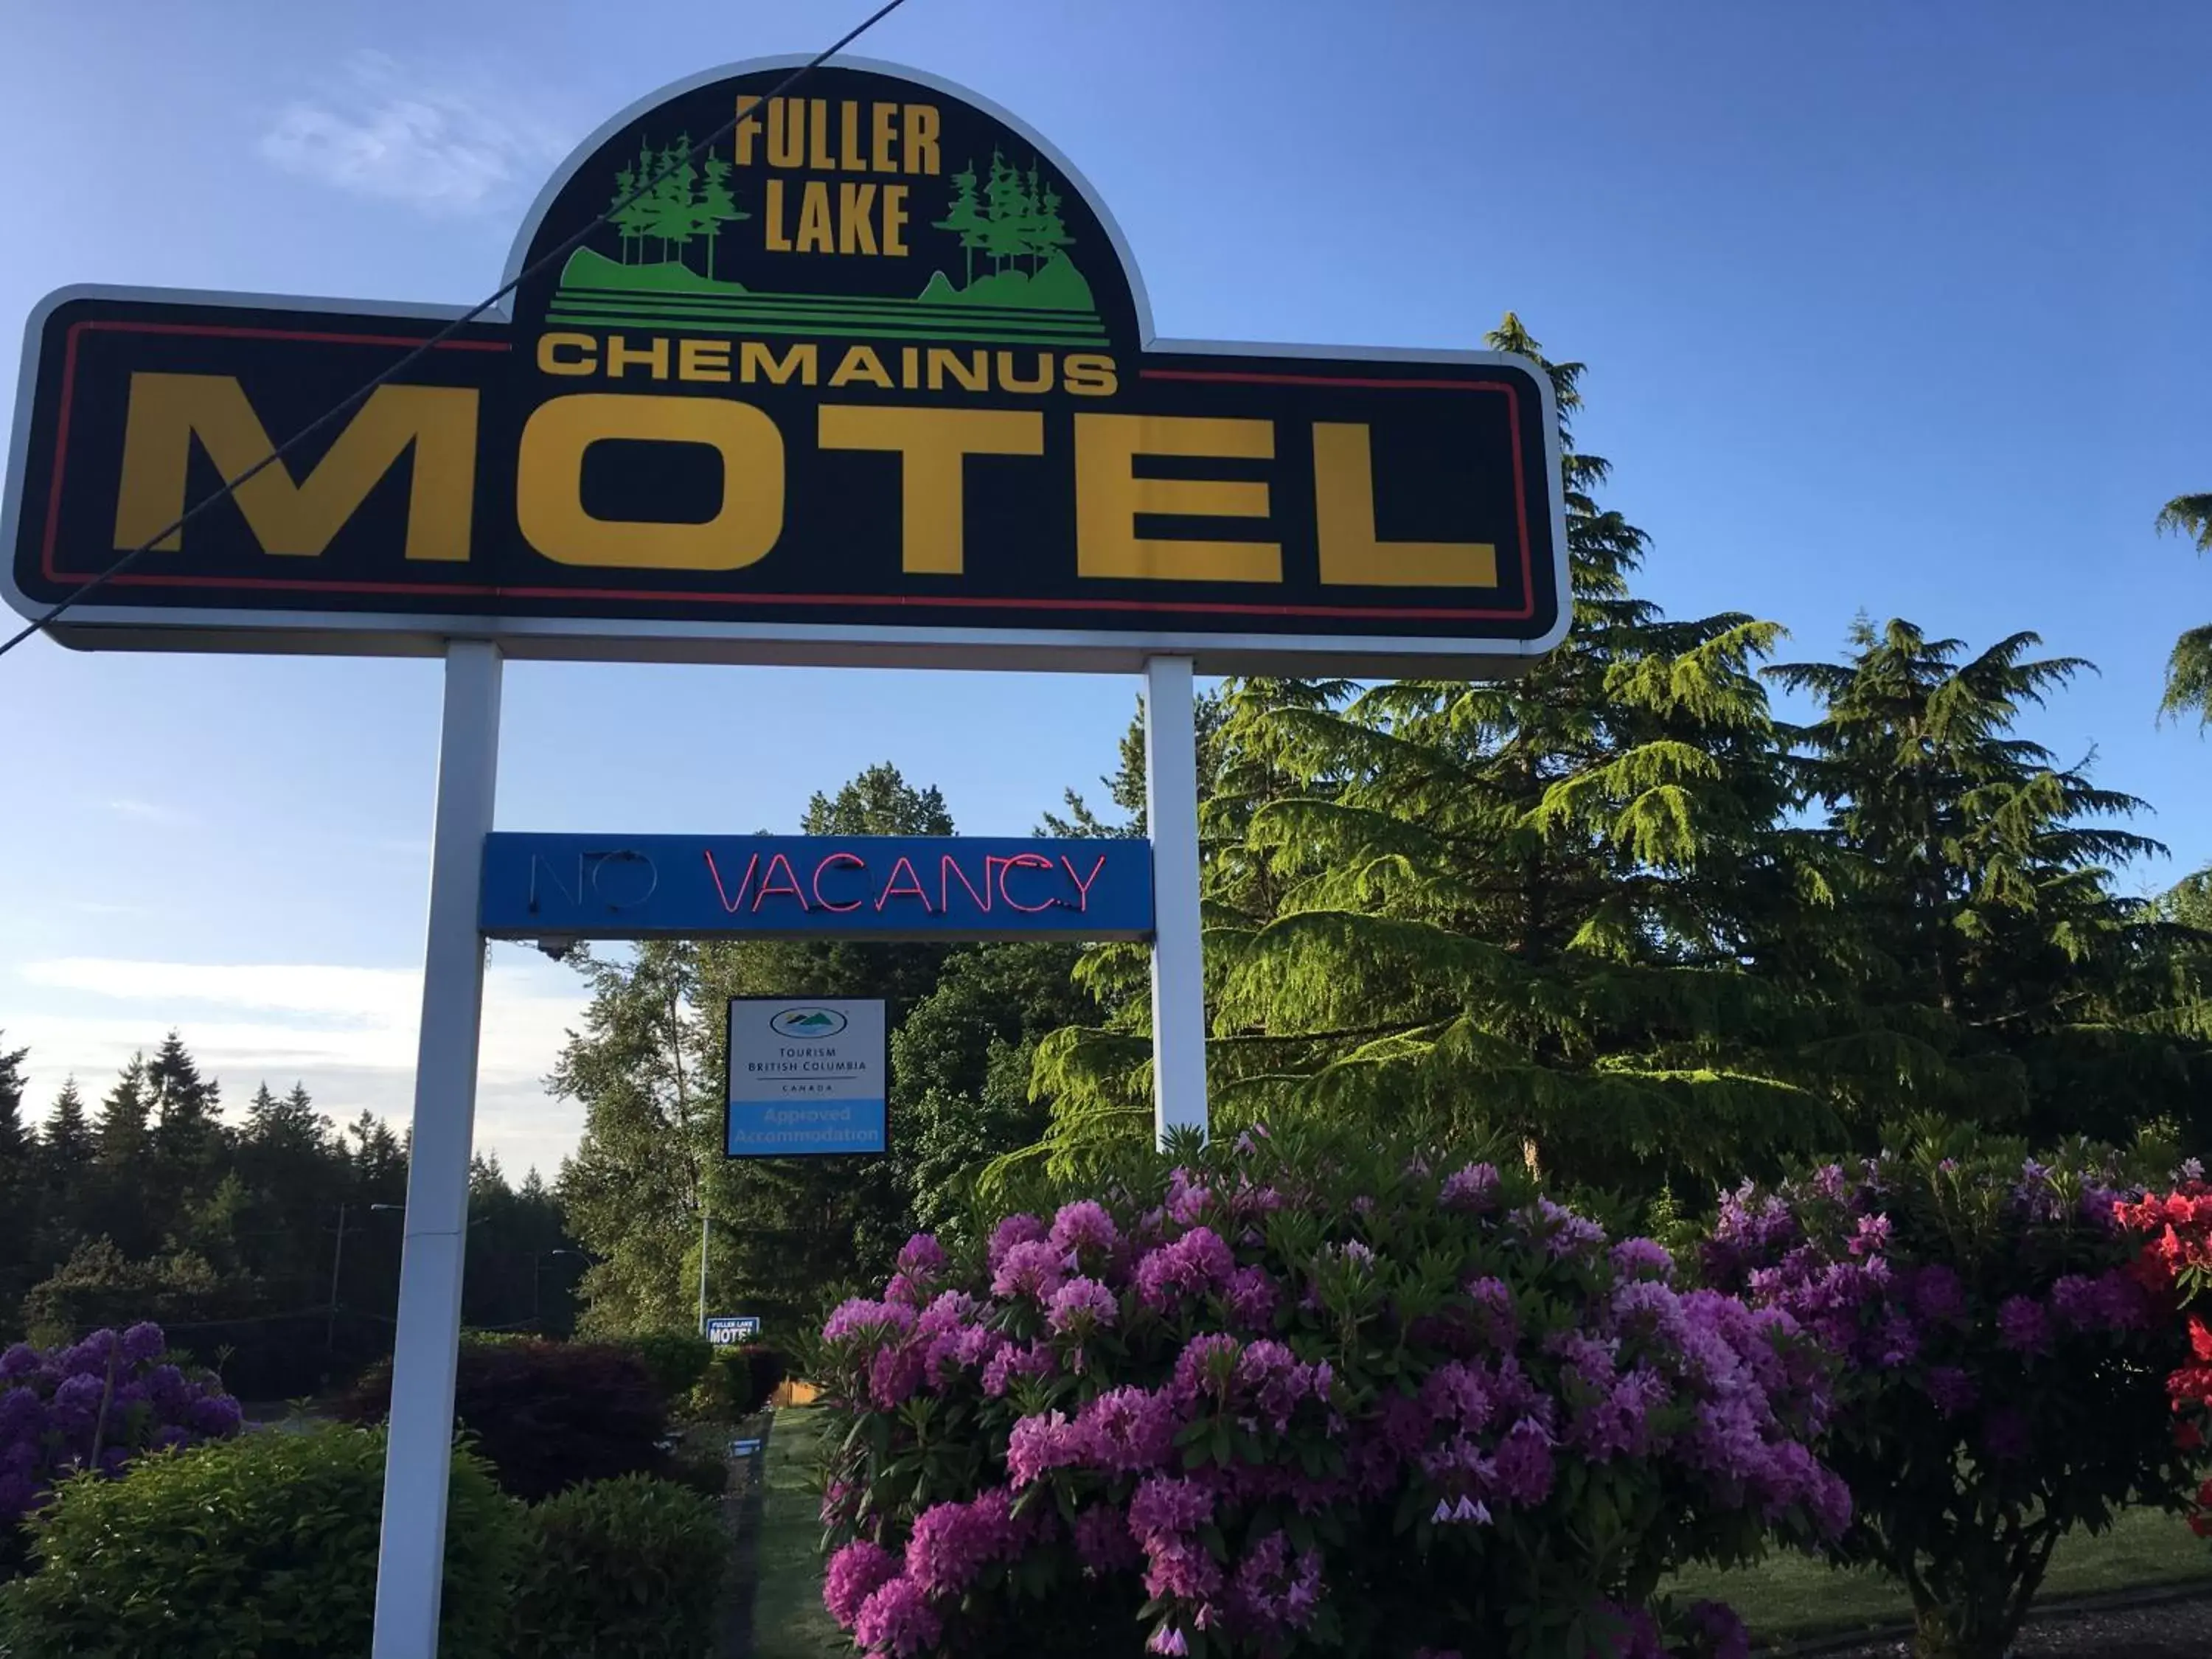 Property logo or sign in Fuller Lake Chemainus Motel